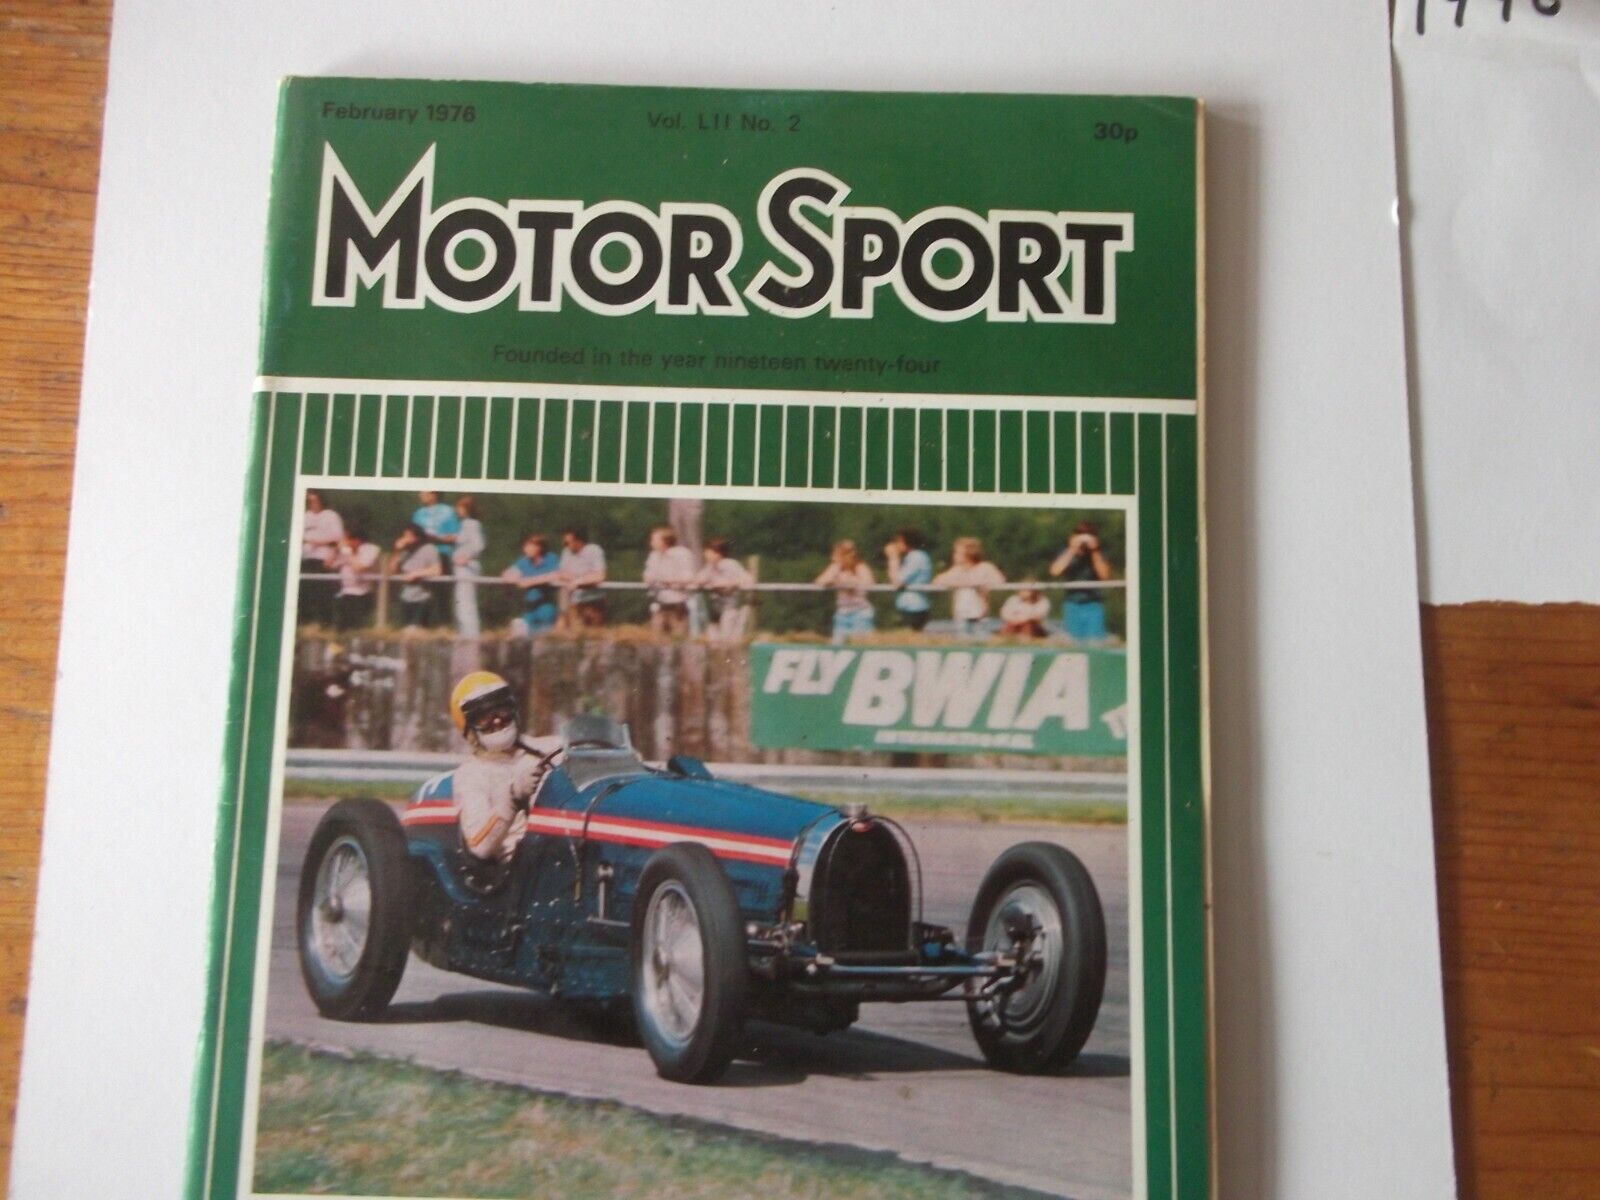 Motor Sport Magazine February 1976 - ideal birthday gift too!